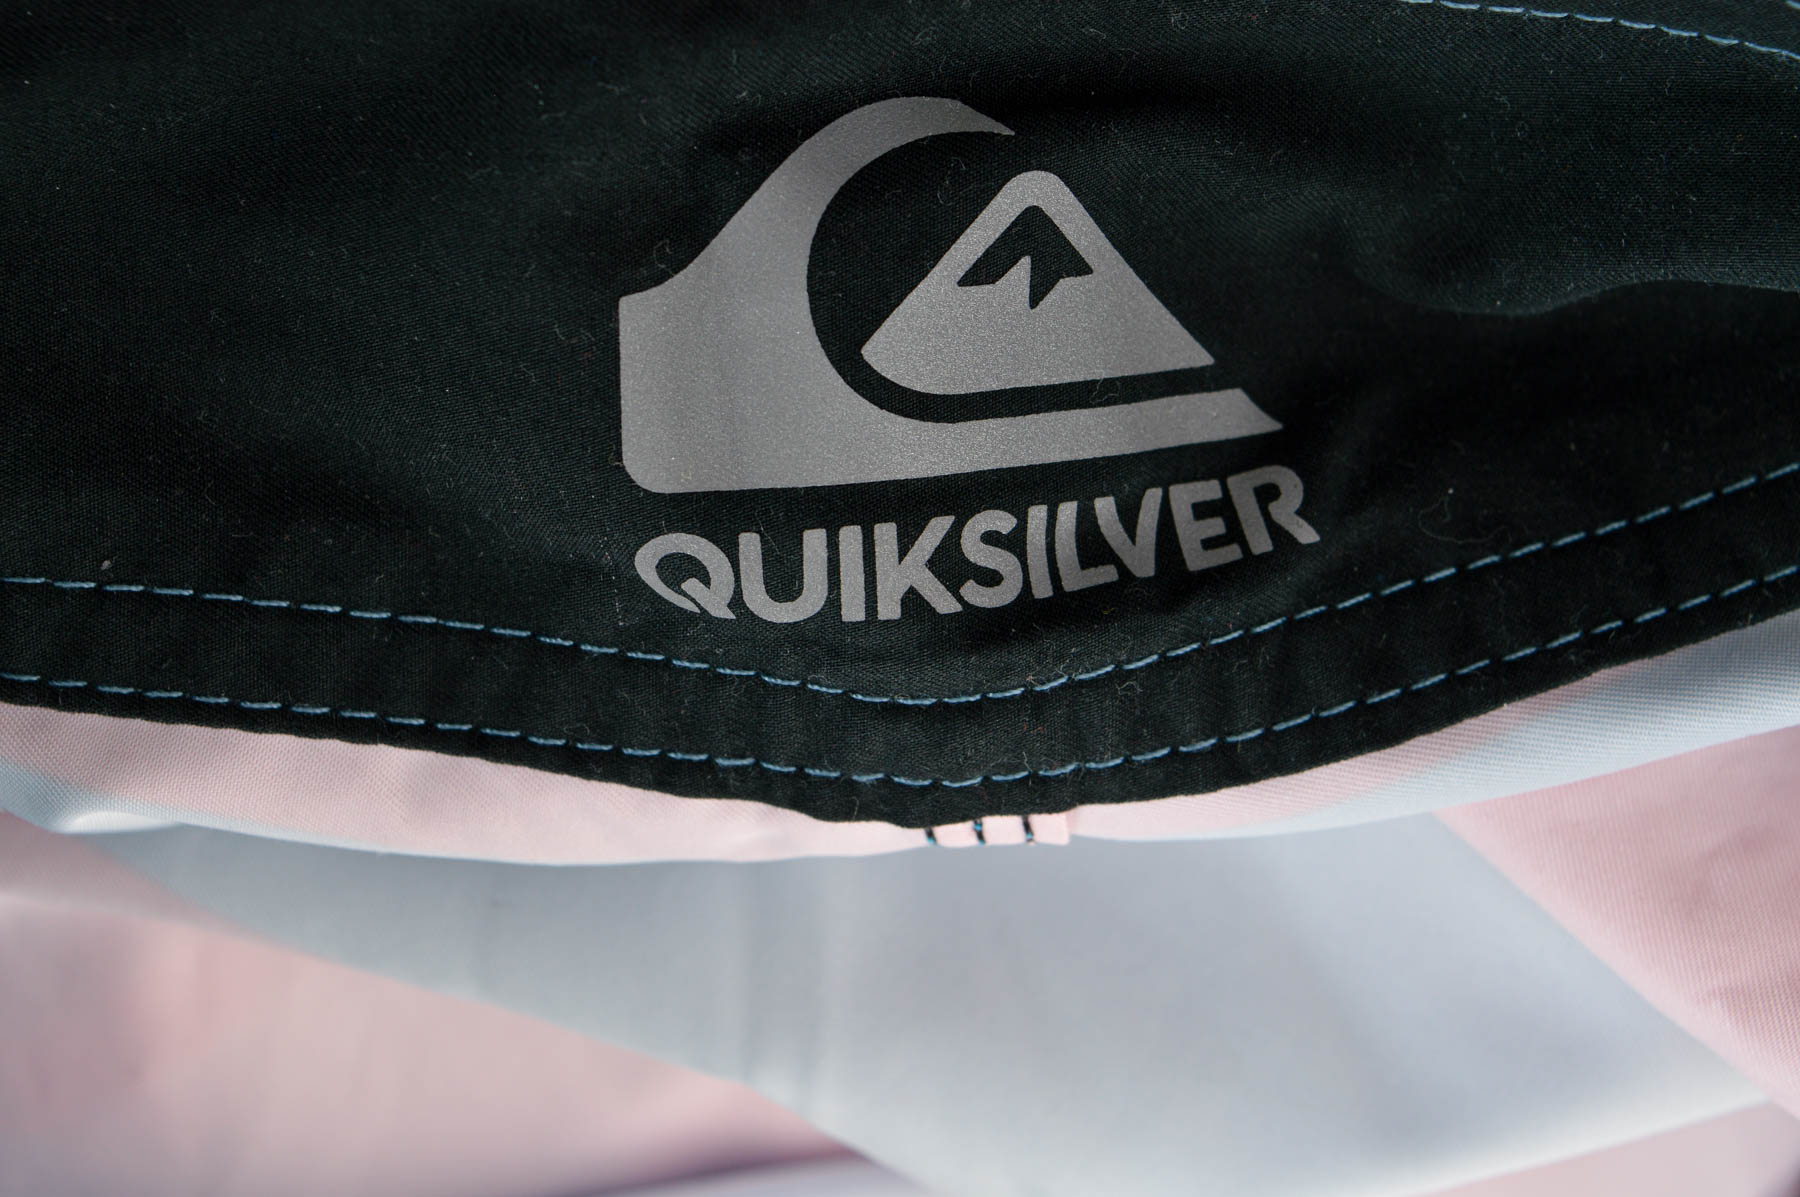 Men's shorts - Quiksilver - 2